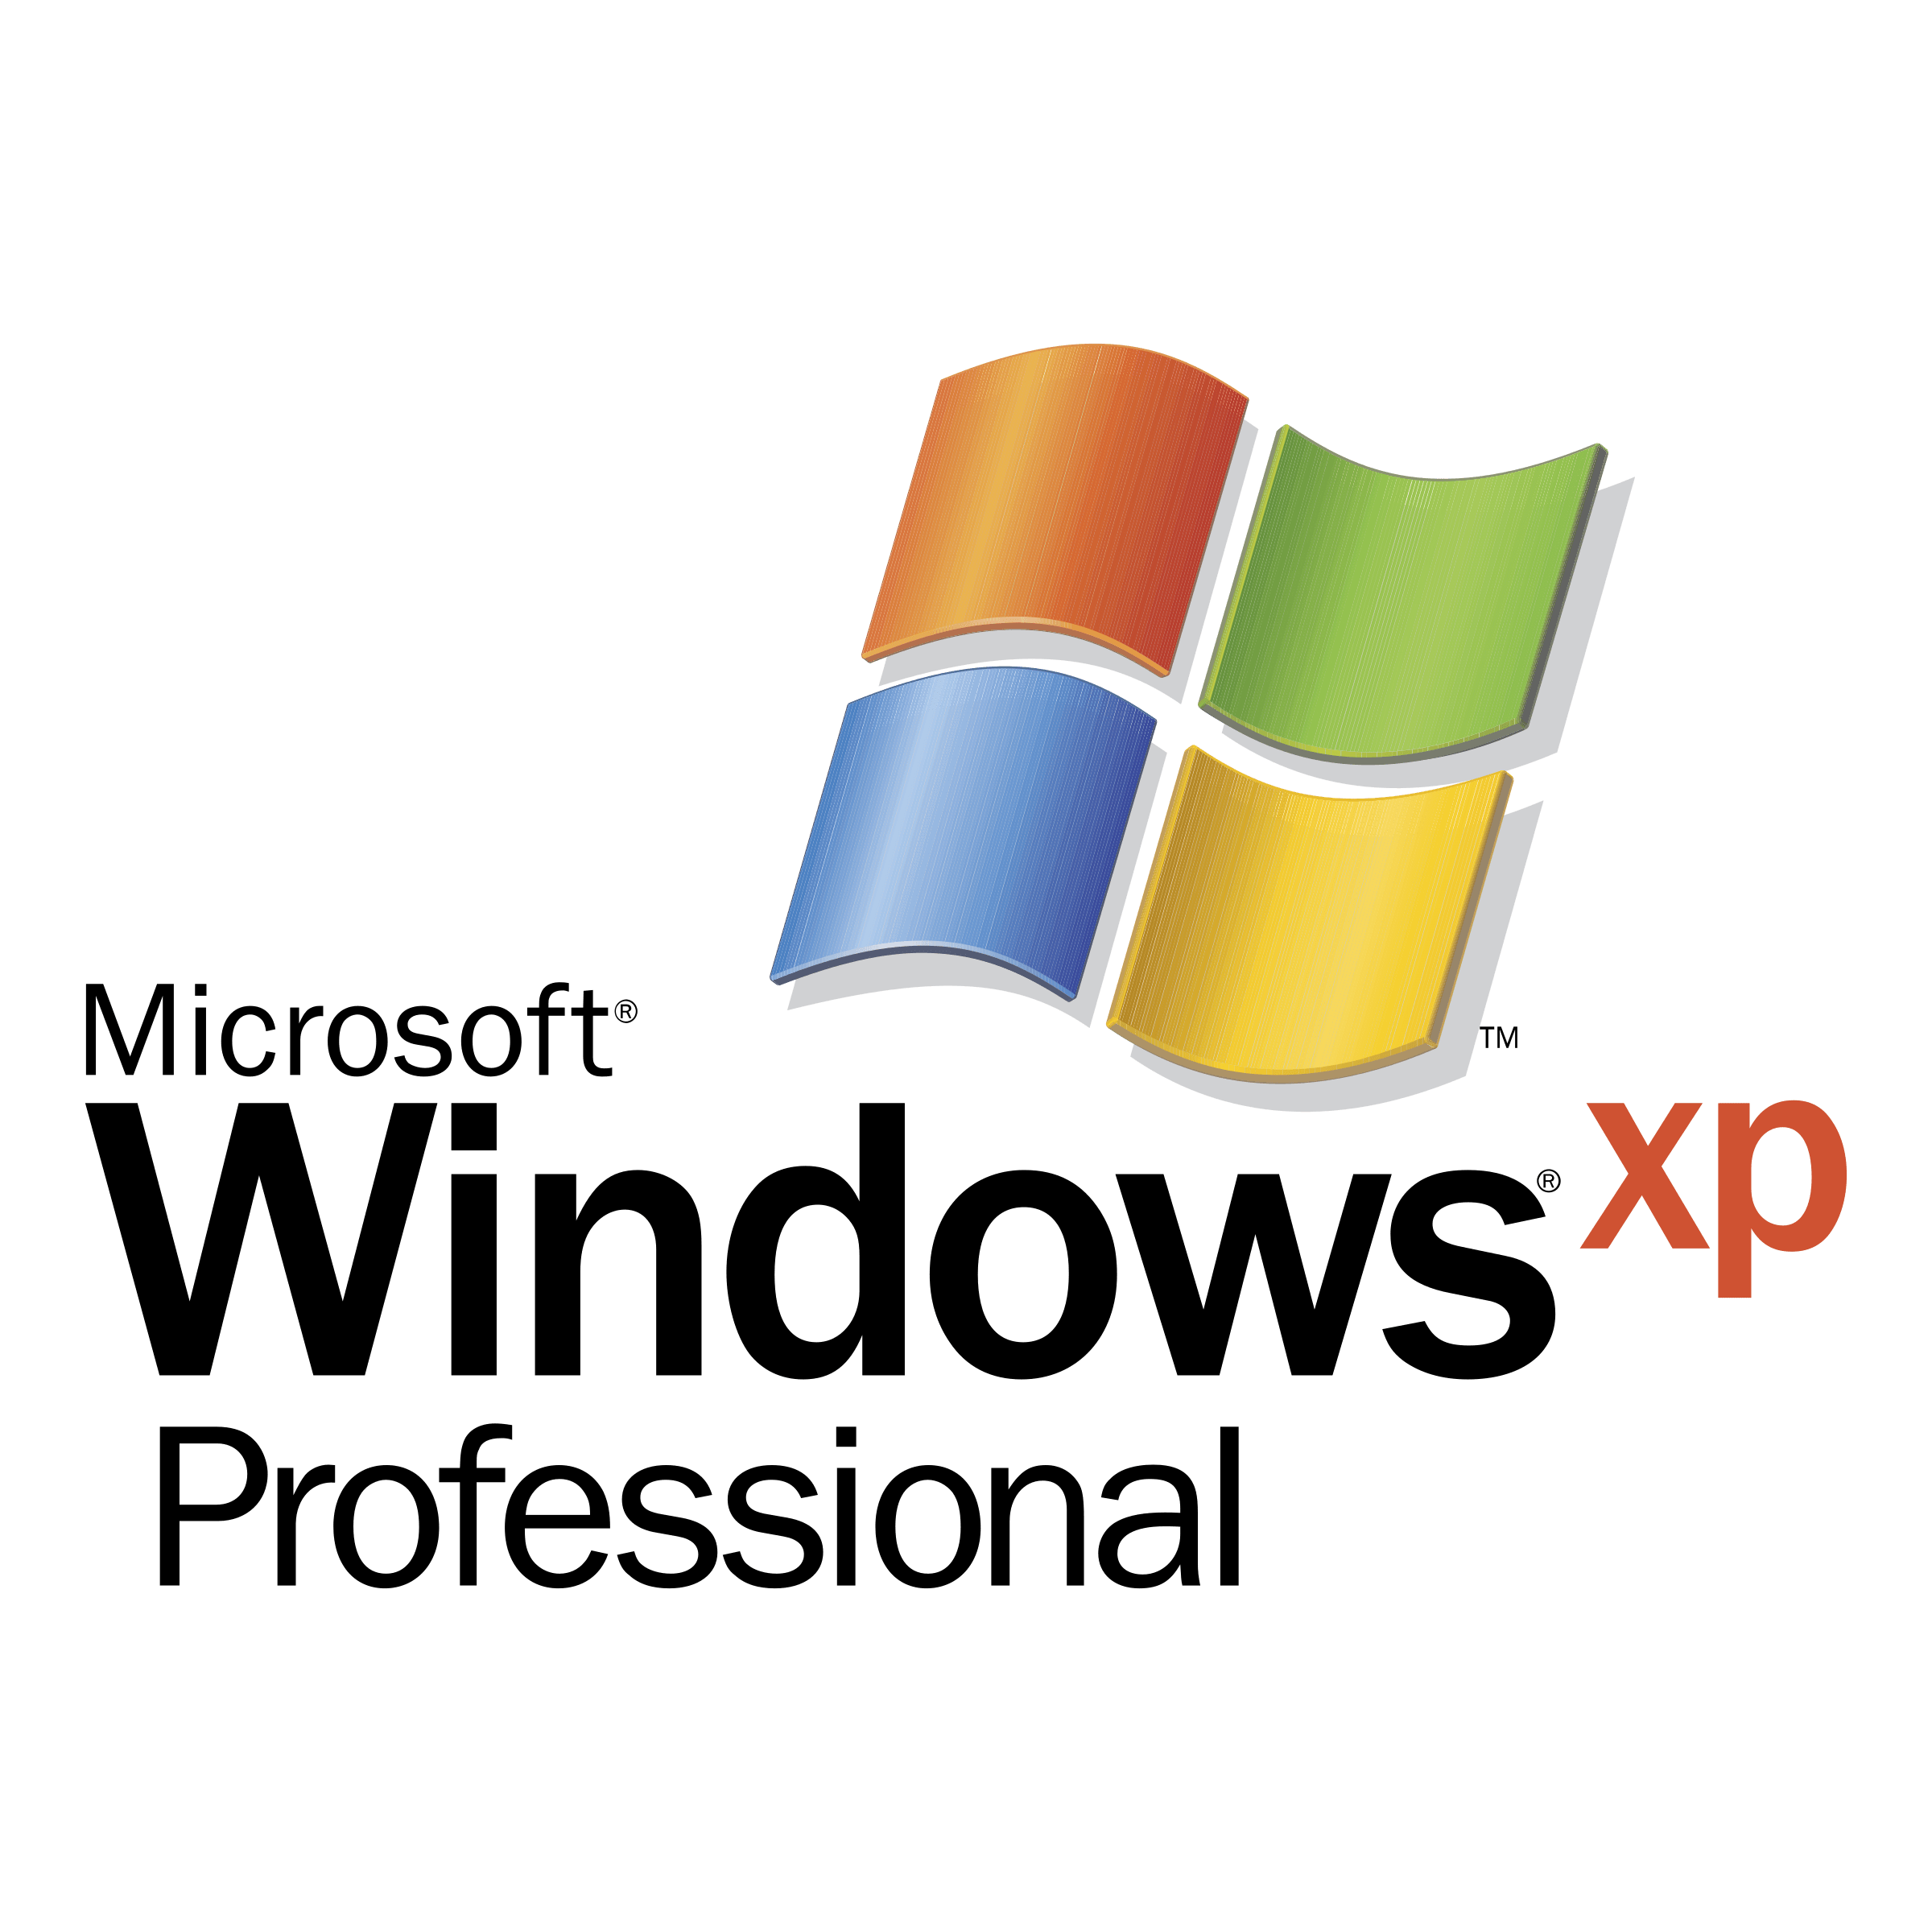 Windows XP Professional Logo - Microsoft Windows XP Professional Logo PNG Transparent & SVG Vector ...